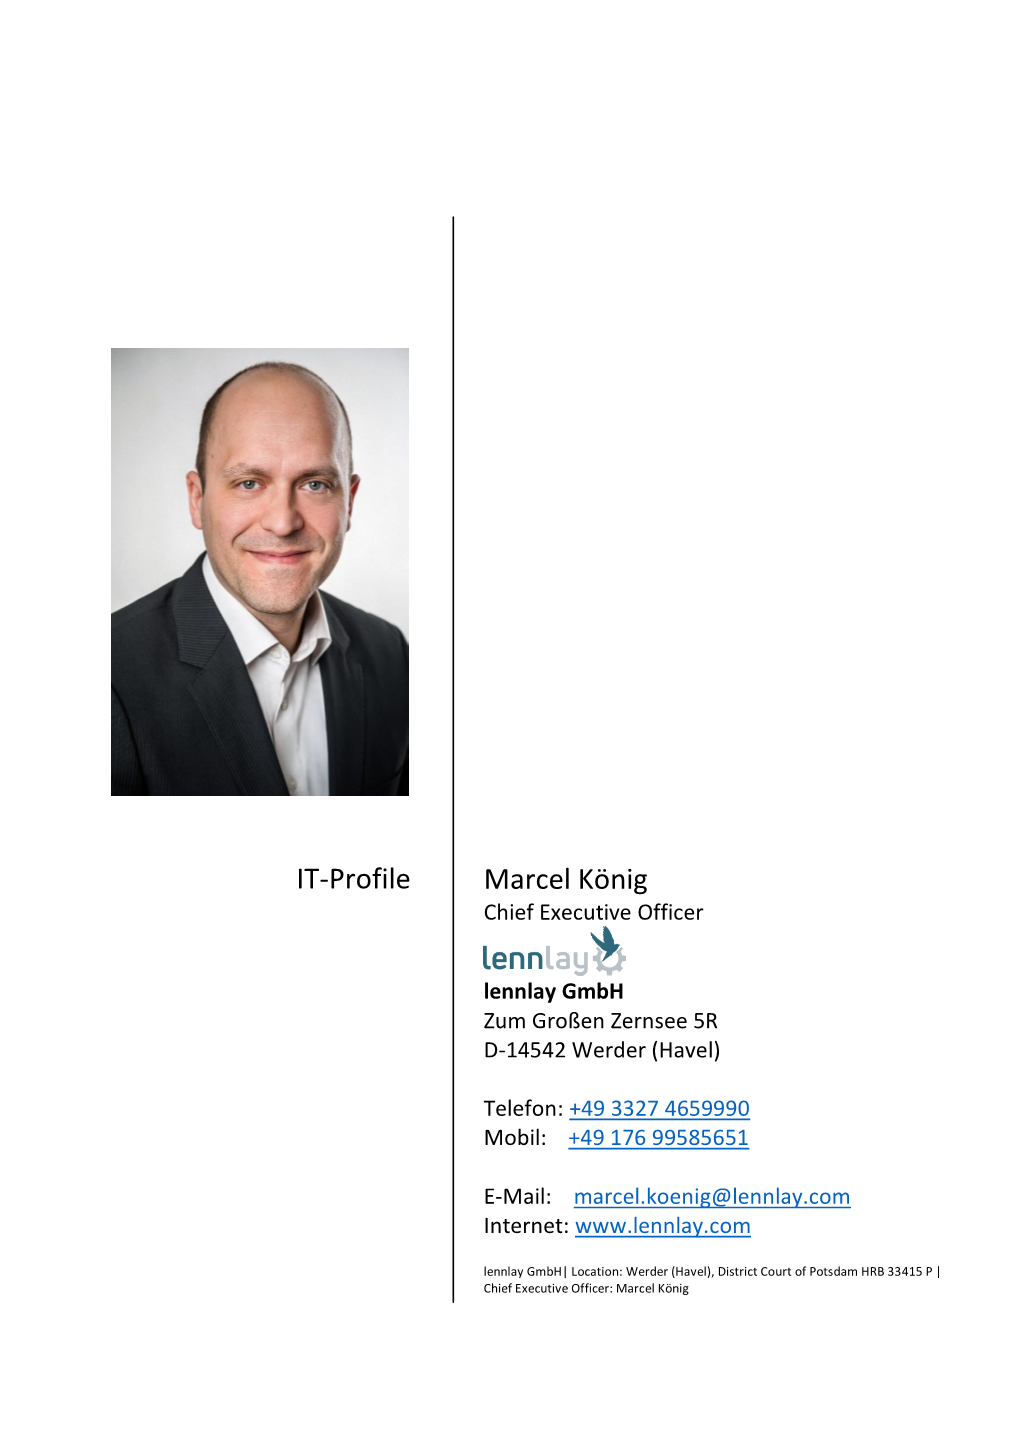 Marcel König IT-Profile